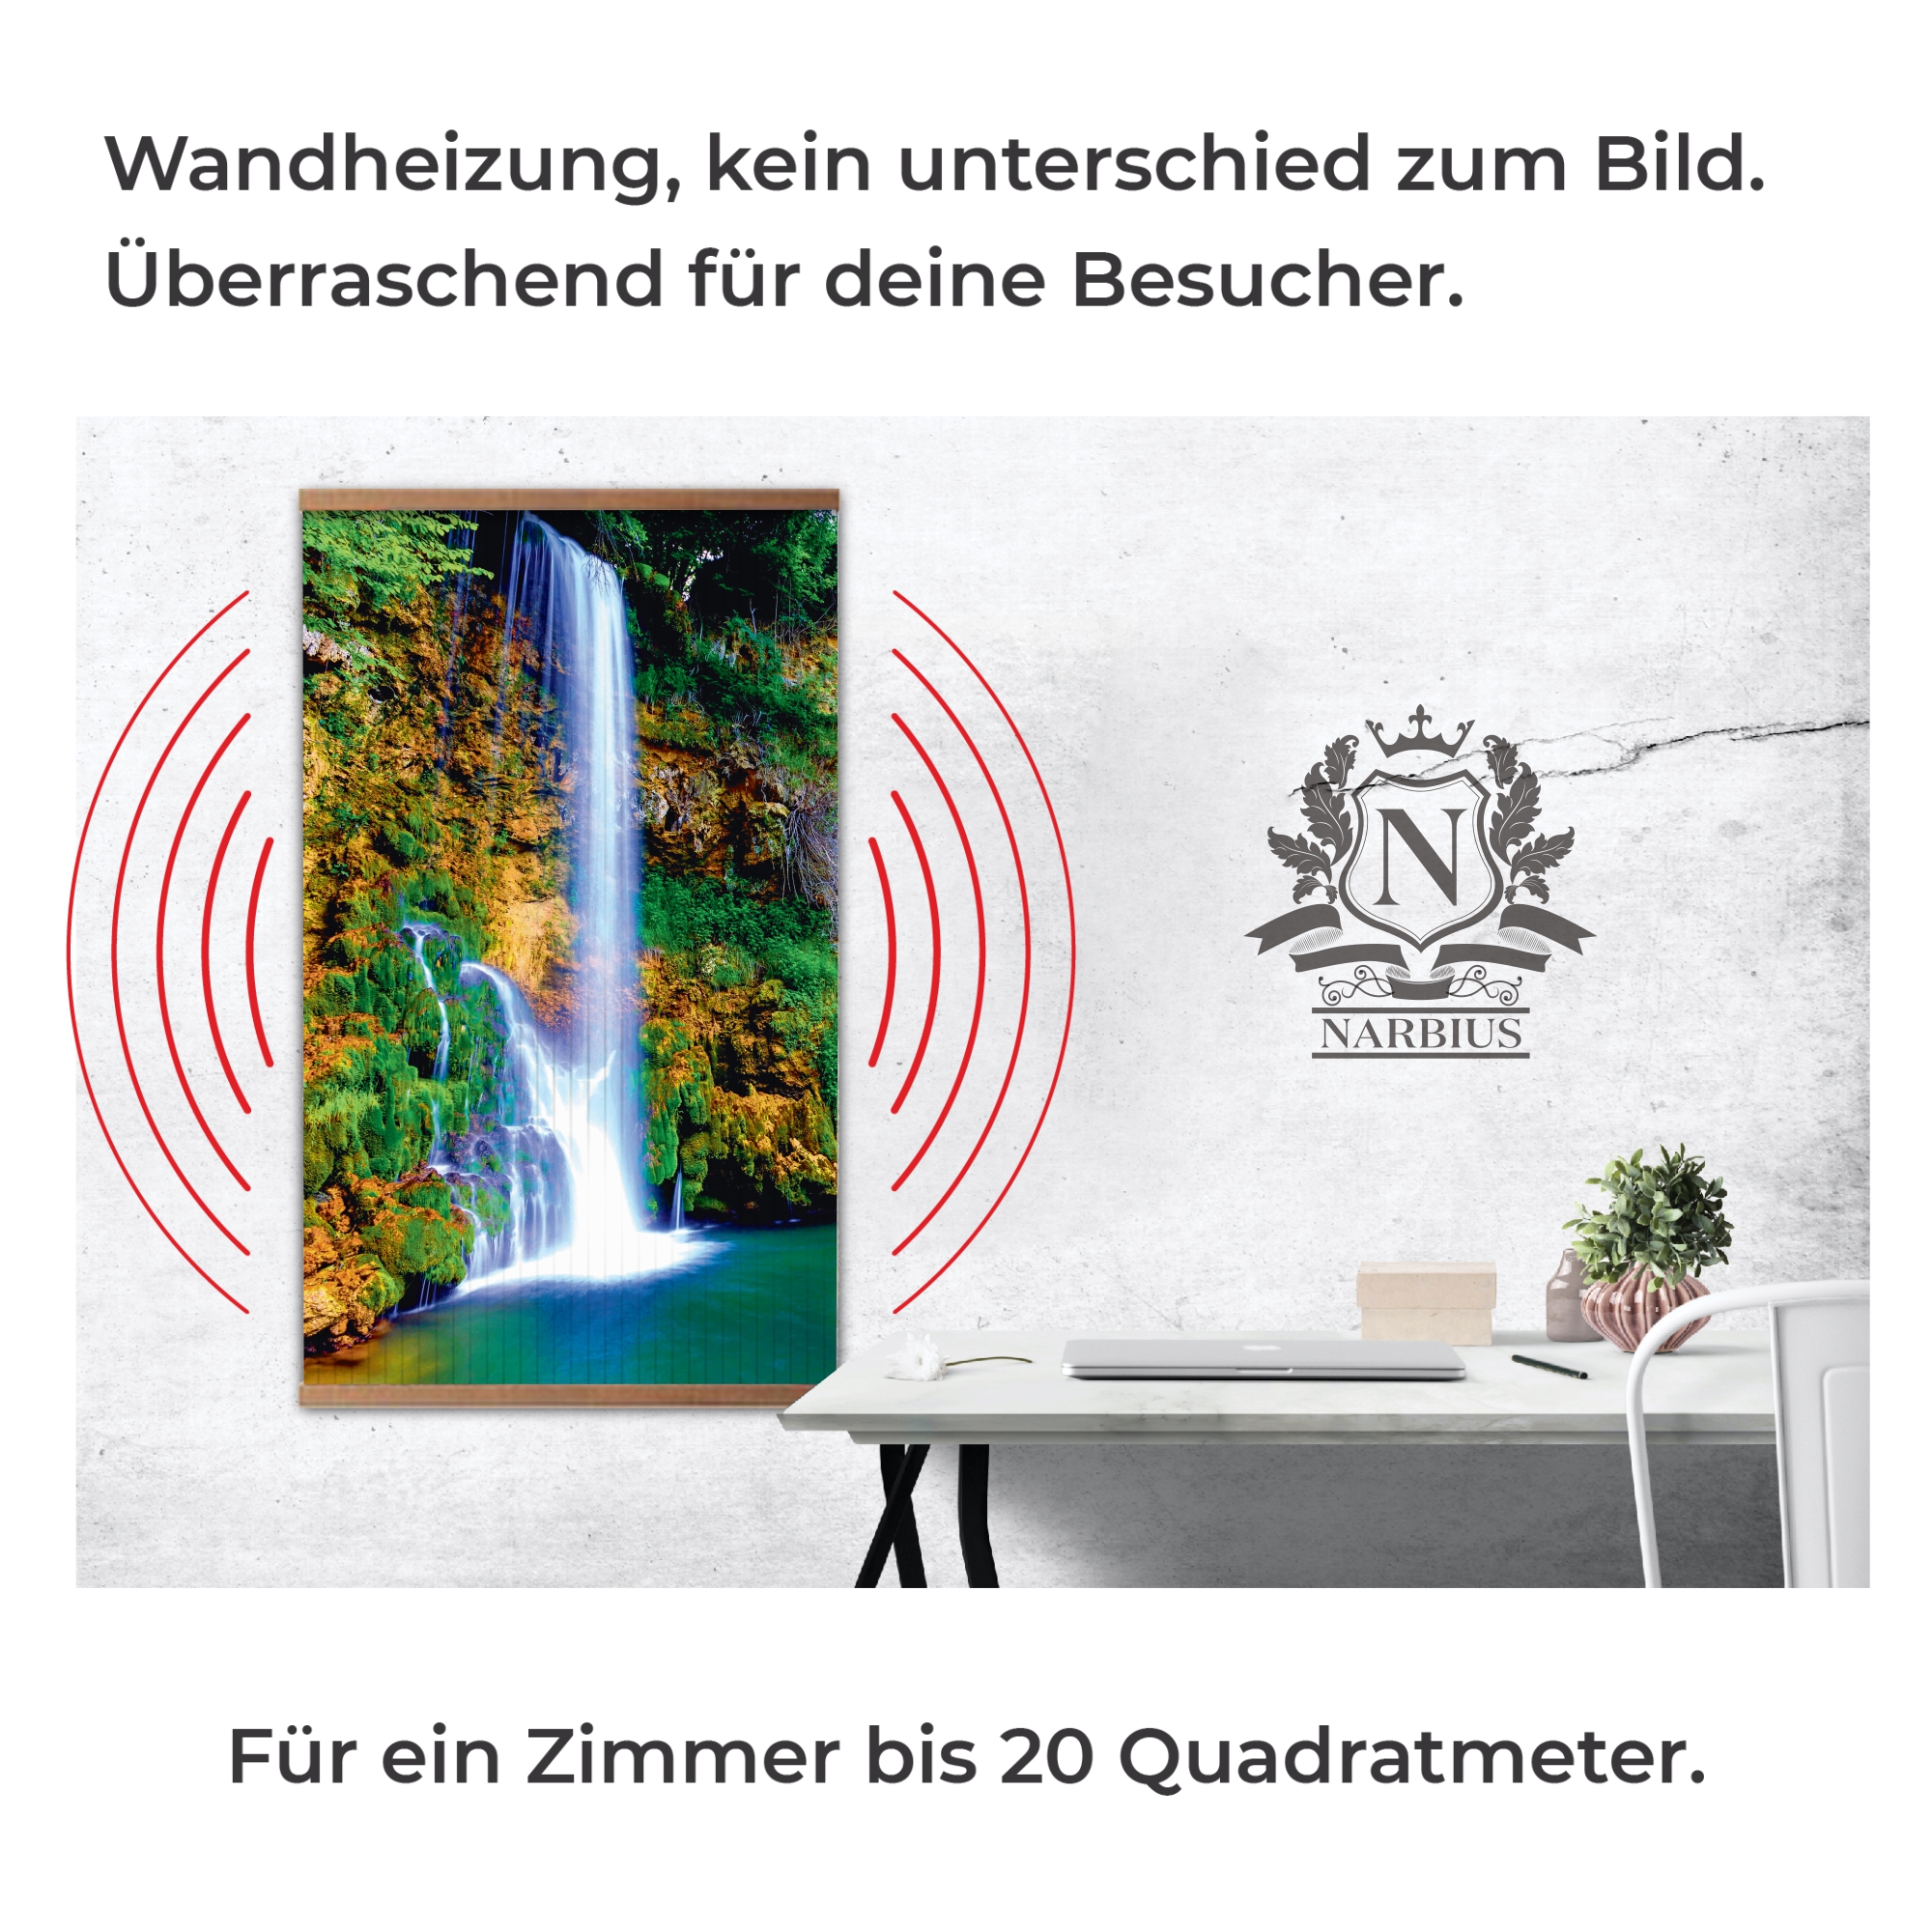 Infrarotheizung 500 Watt Bildheizung Heizbild Serie Home Kamin Infrarot Wandheizung Heizer Bild Wasserfall